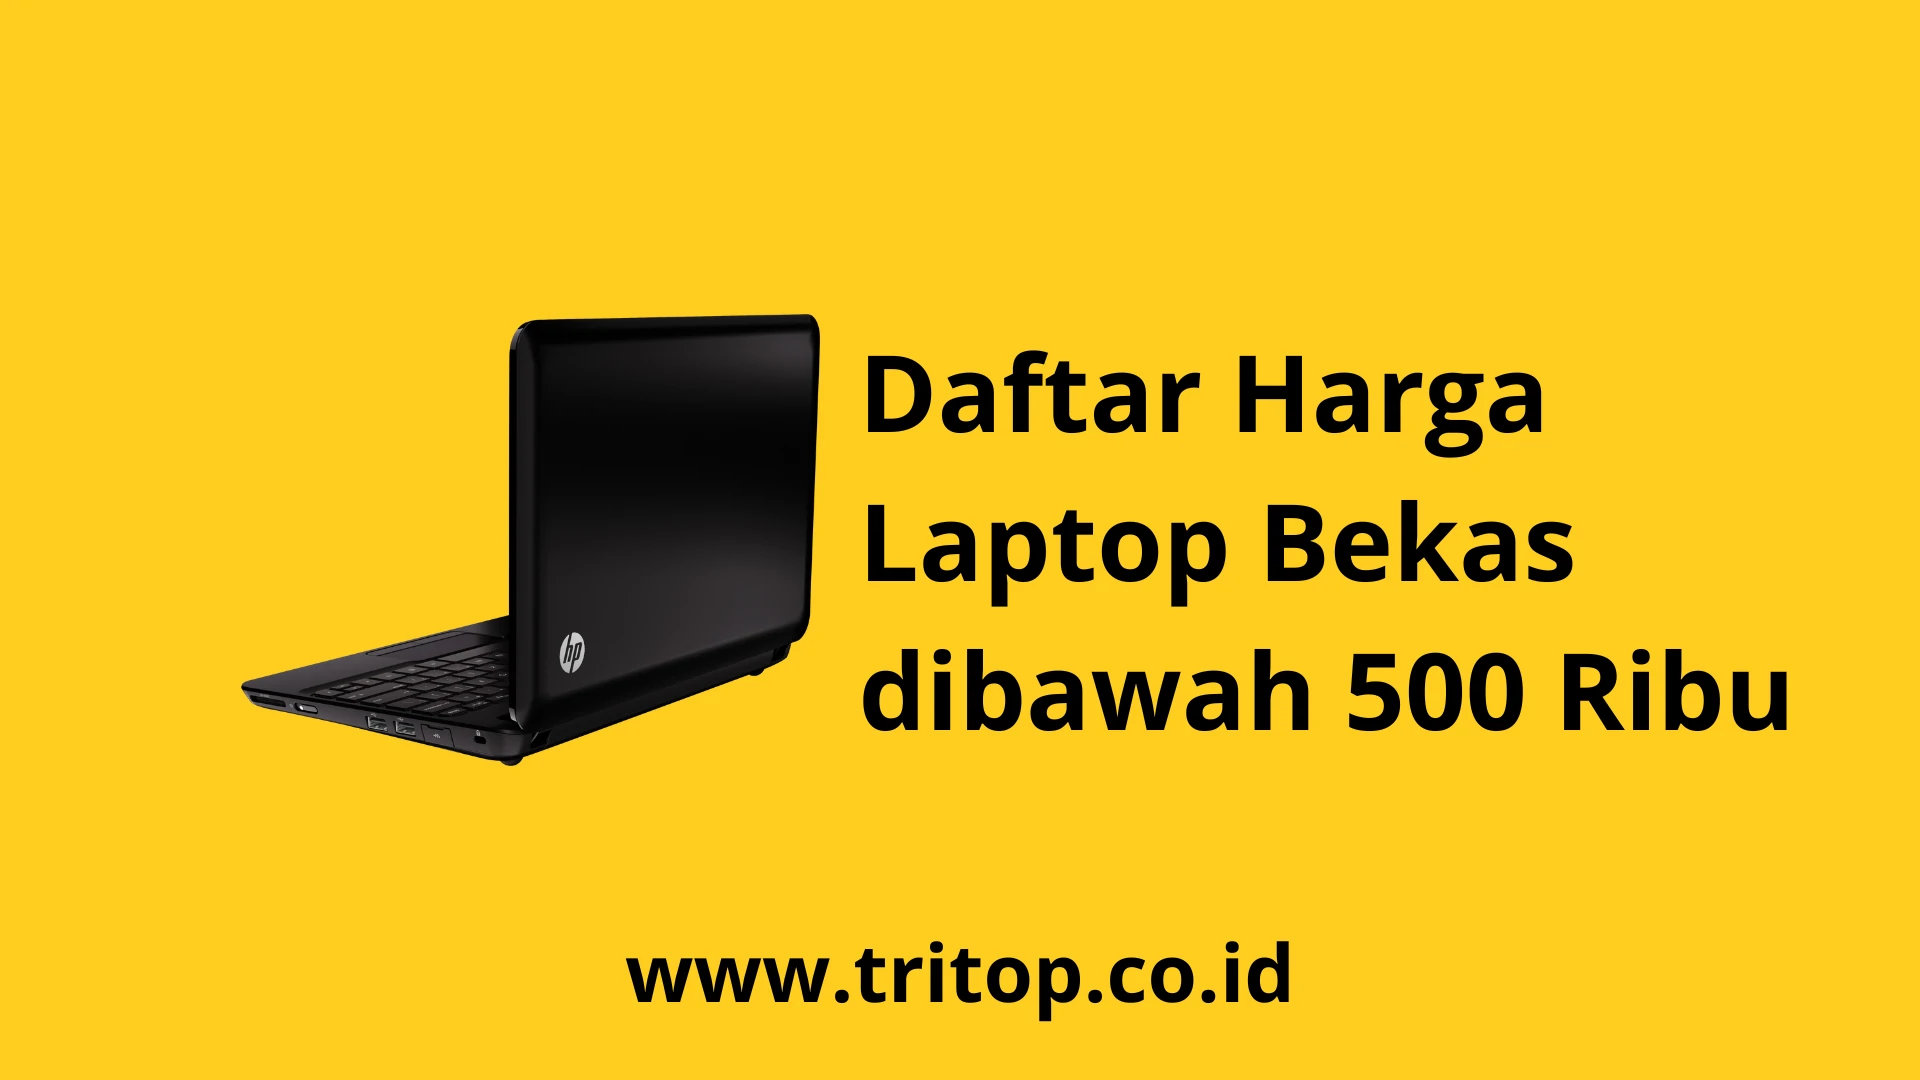 Harga Laptop Bekas dibawah 500 Ribu Tritop.co.id